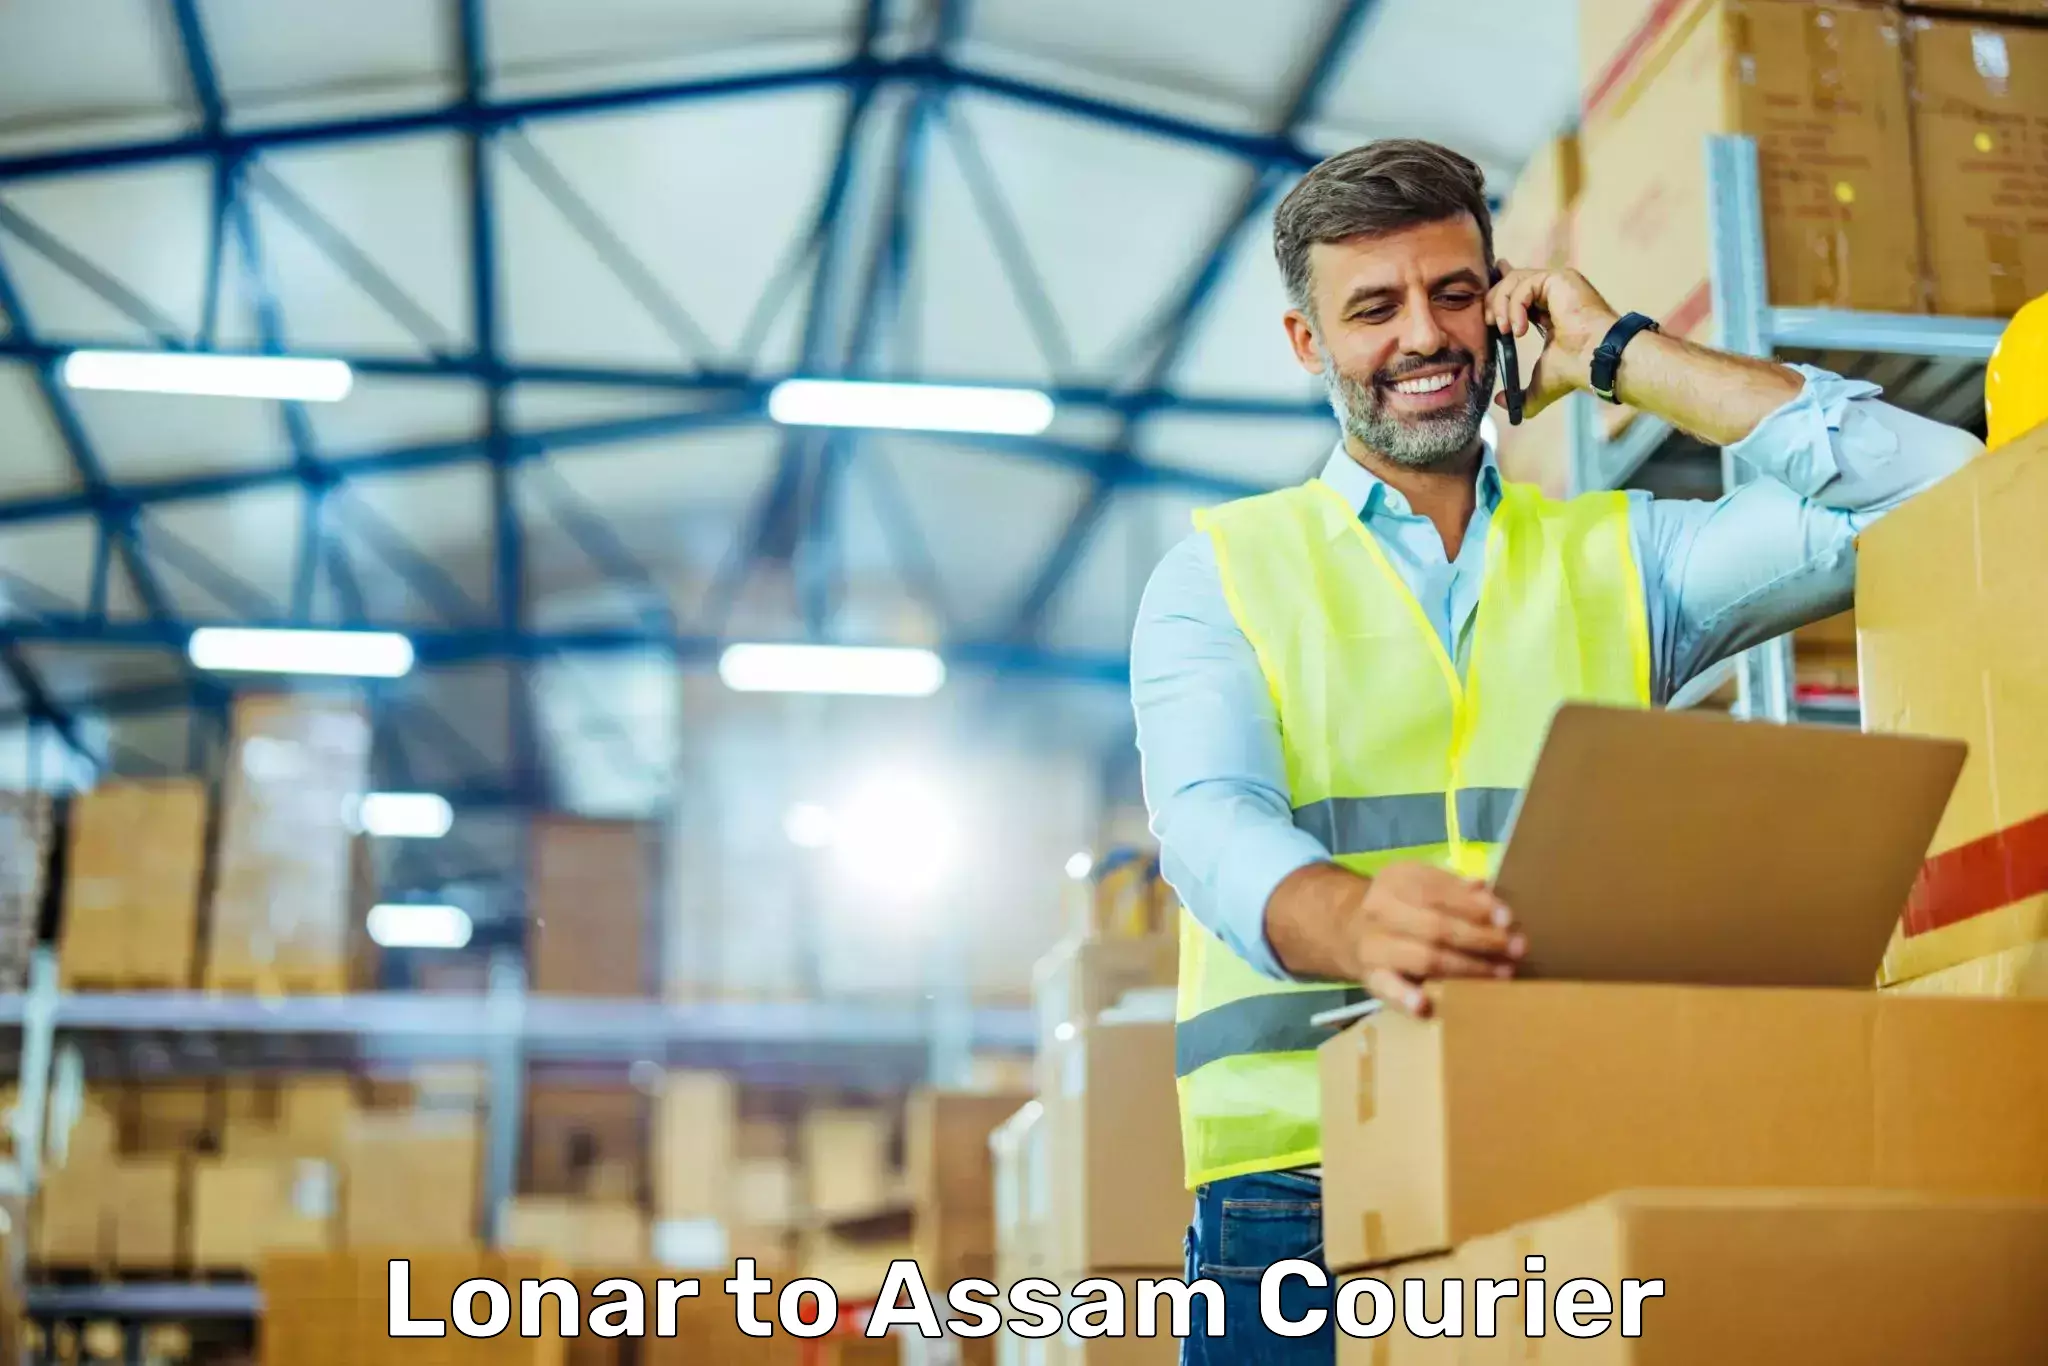 Courier service comparison in Lonar to Darrang